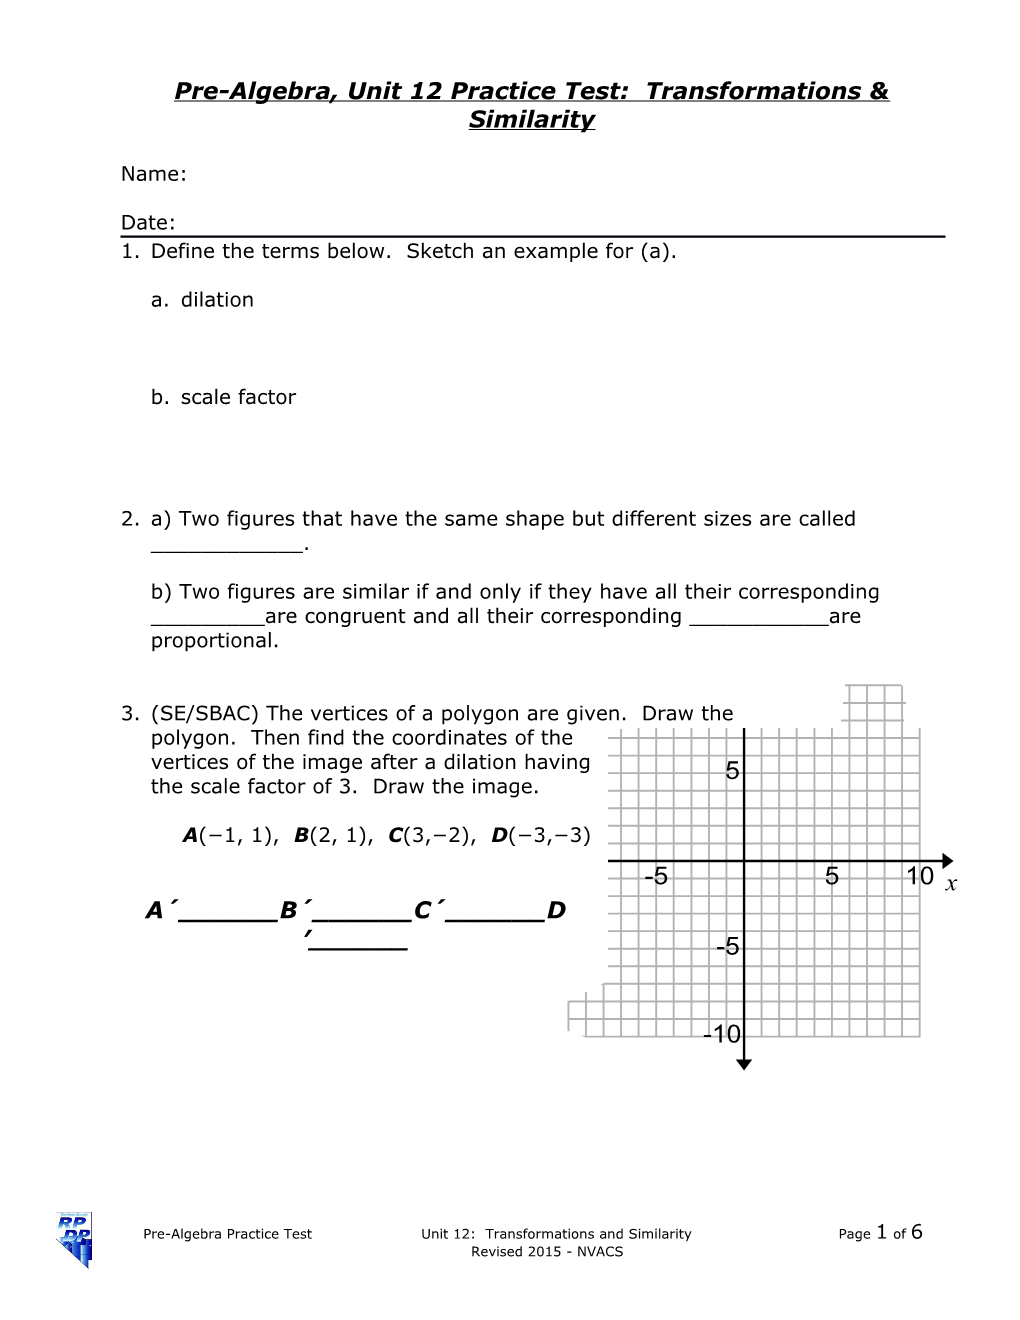 Pre-Algebra, Unit 12 Practice Test: Transformations & Similarity